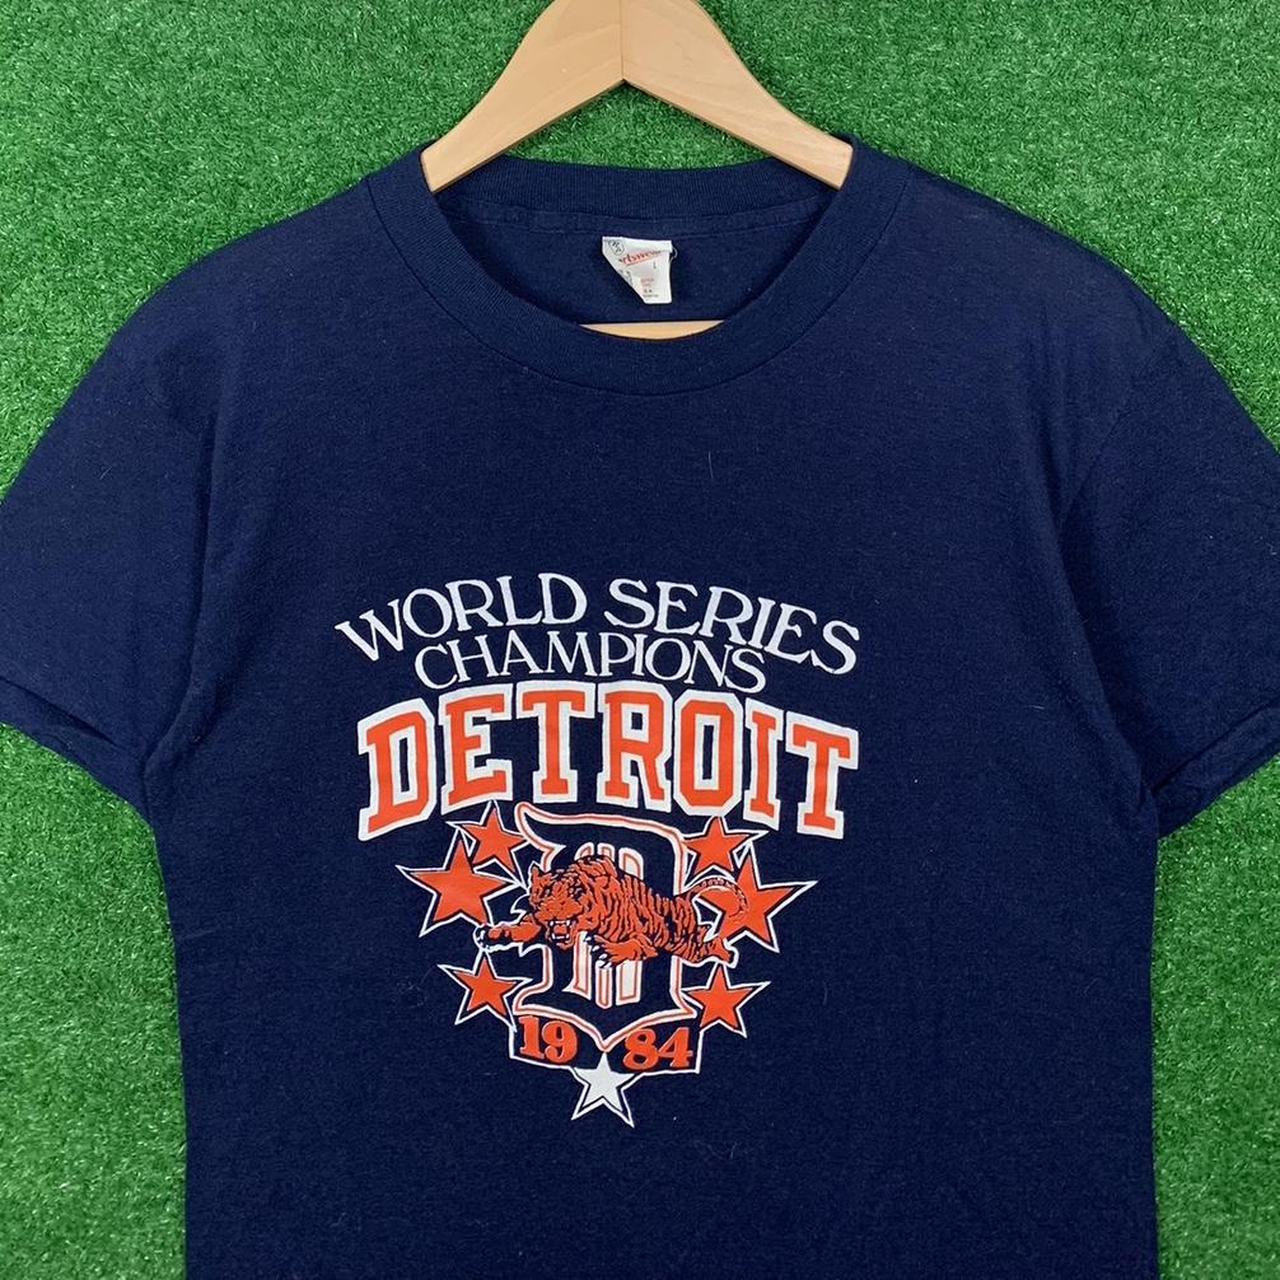 Detroit Tigers 1984 World Series Champs Bless You Boys Shirt